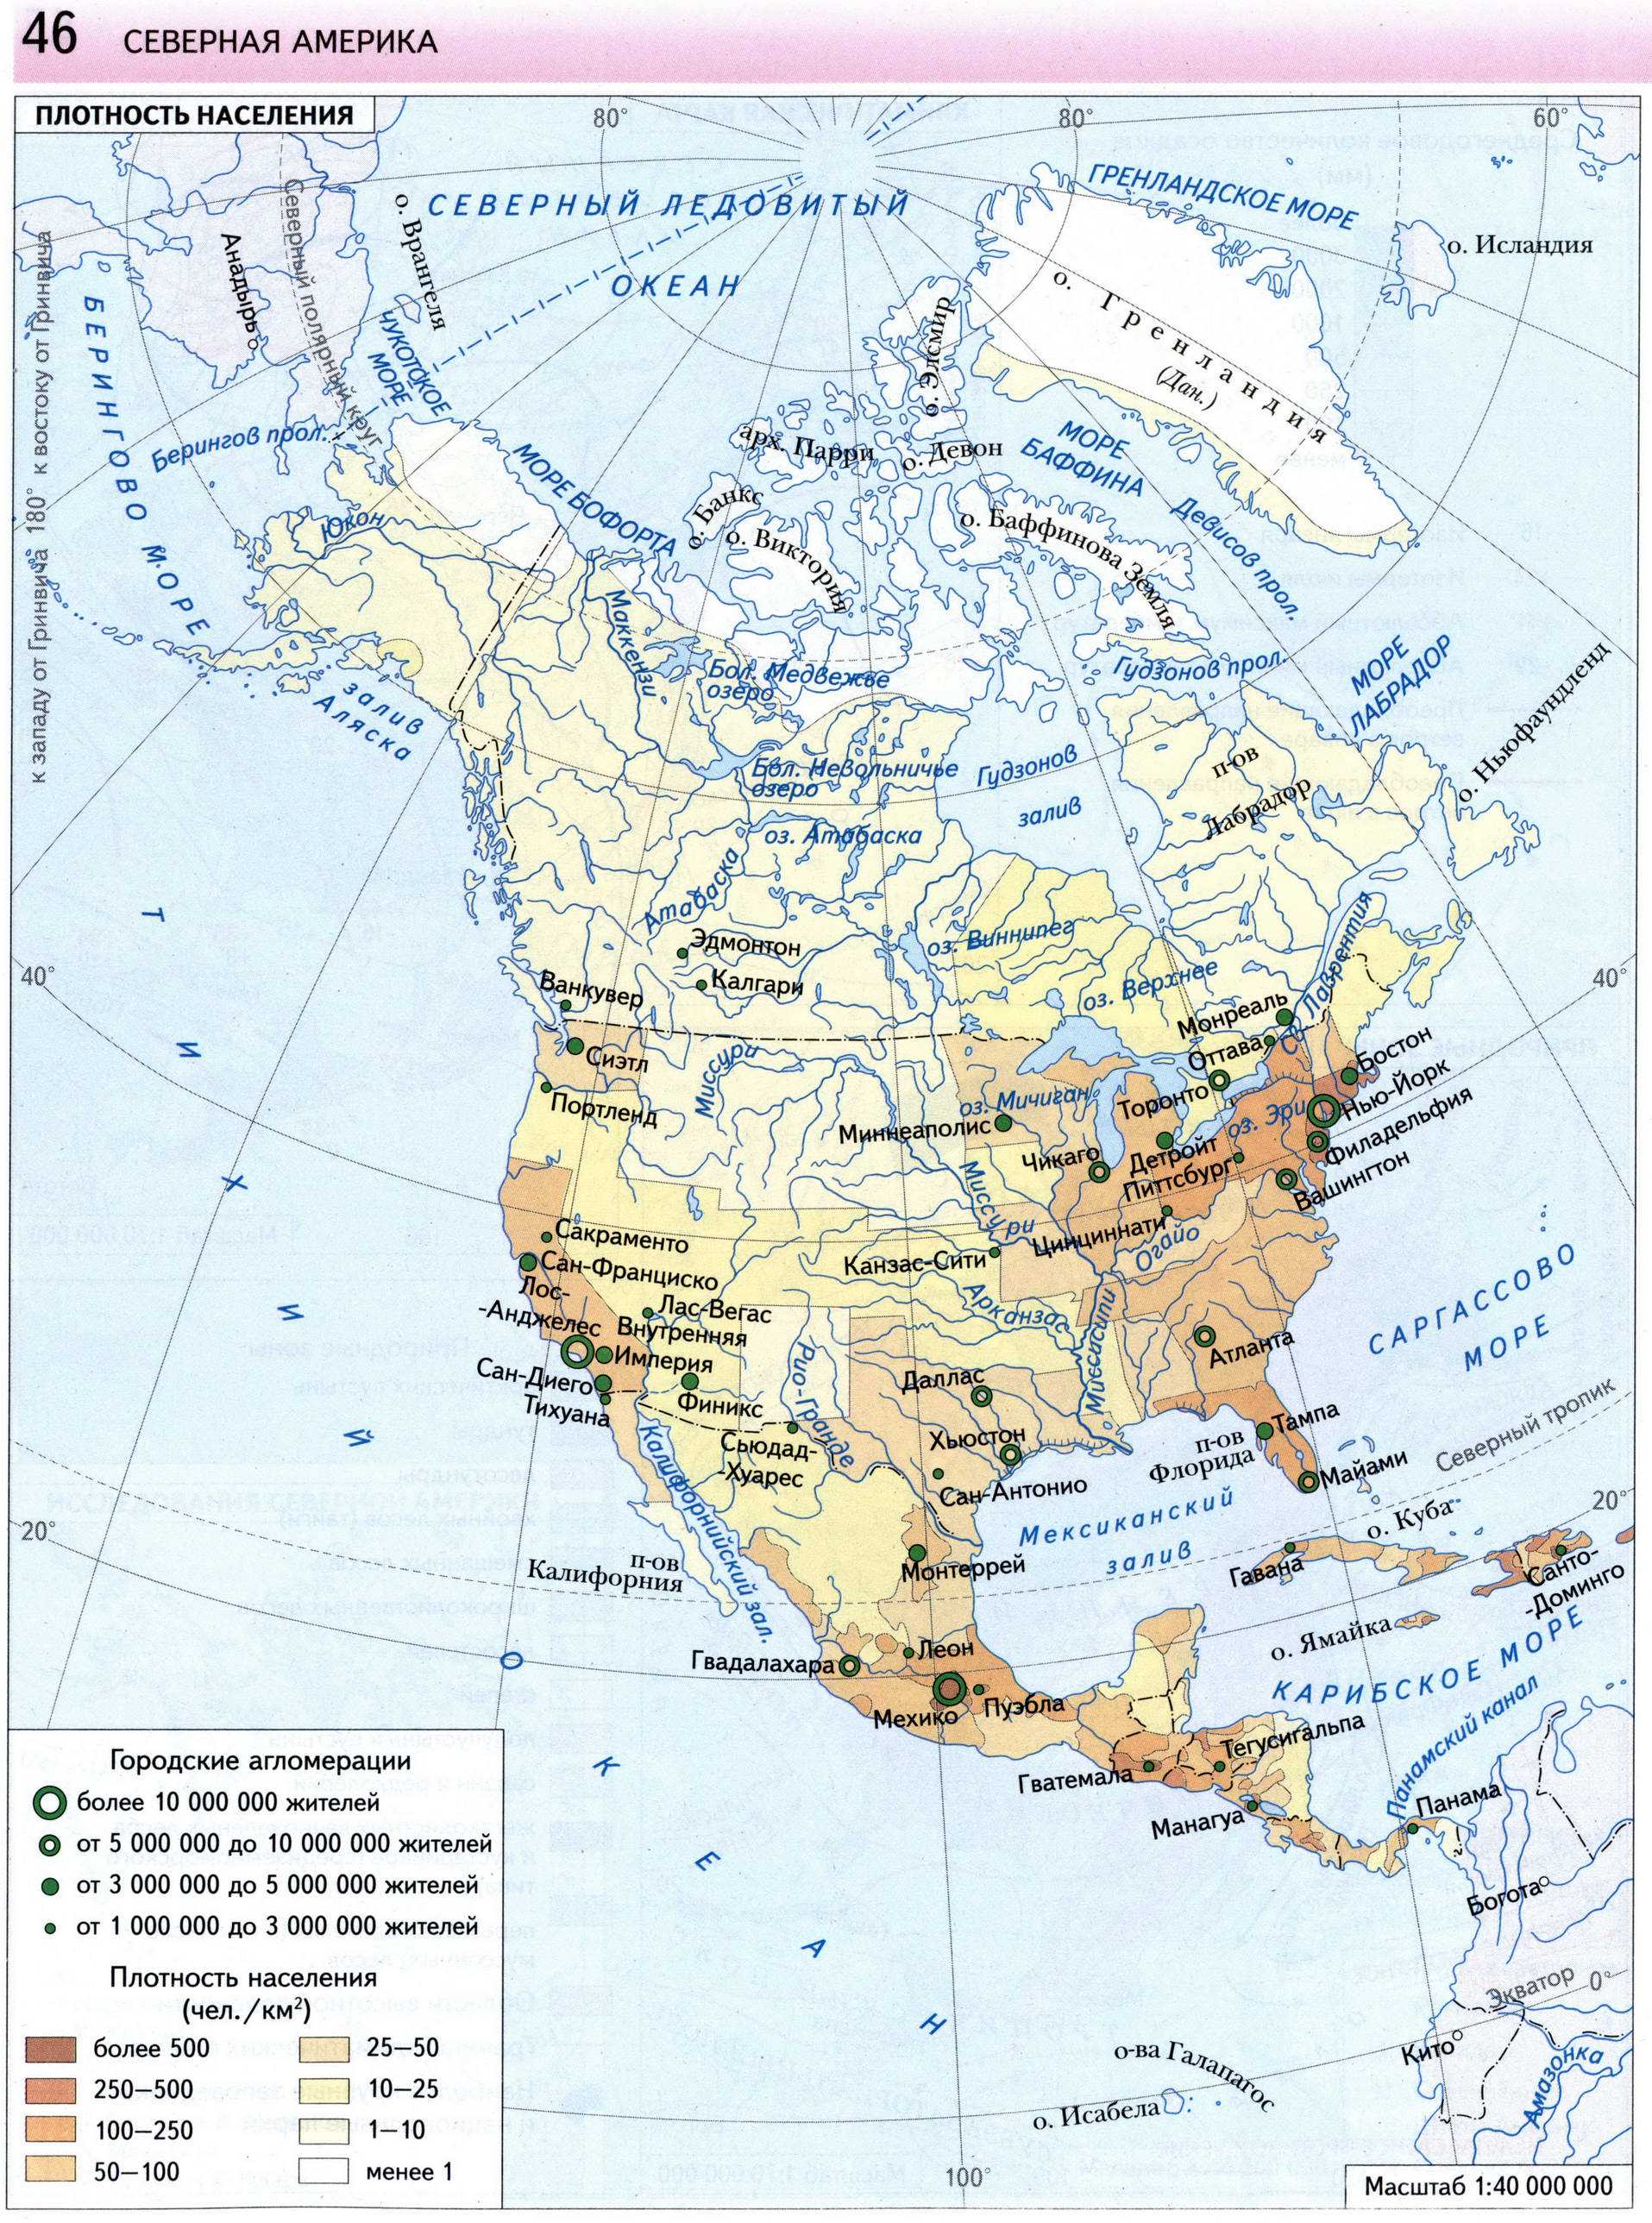 Характеристика карты северная америка. Карта Северной Америки атлас 7 класс. Физическая карта Северной Америки 7 класс атлас. Атлас 7 класс география Северная Америка. Атлас 7 класс география Северная Америка политическая карта.